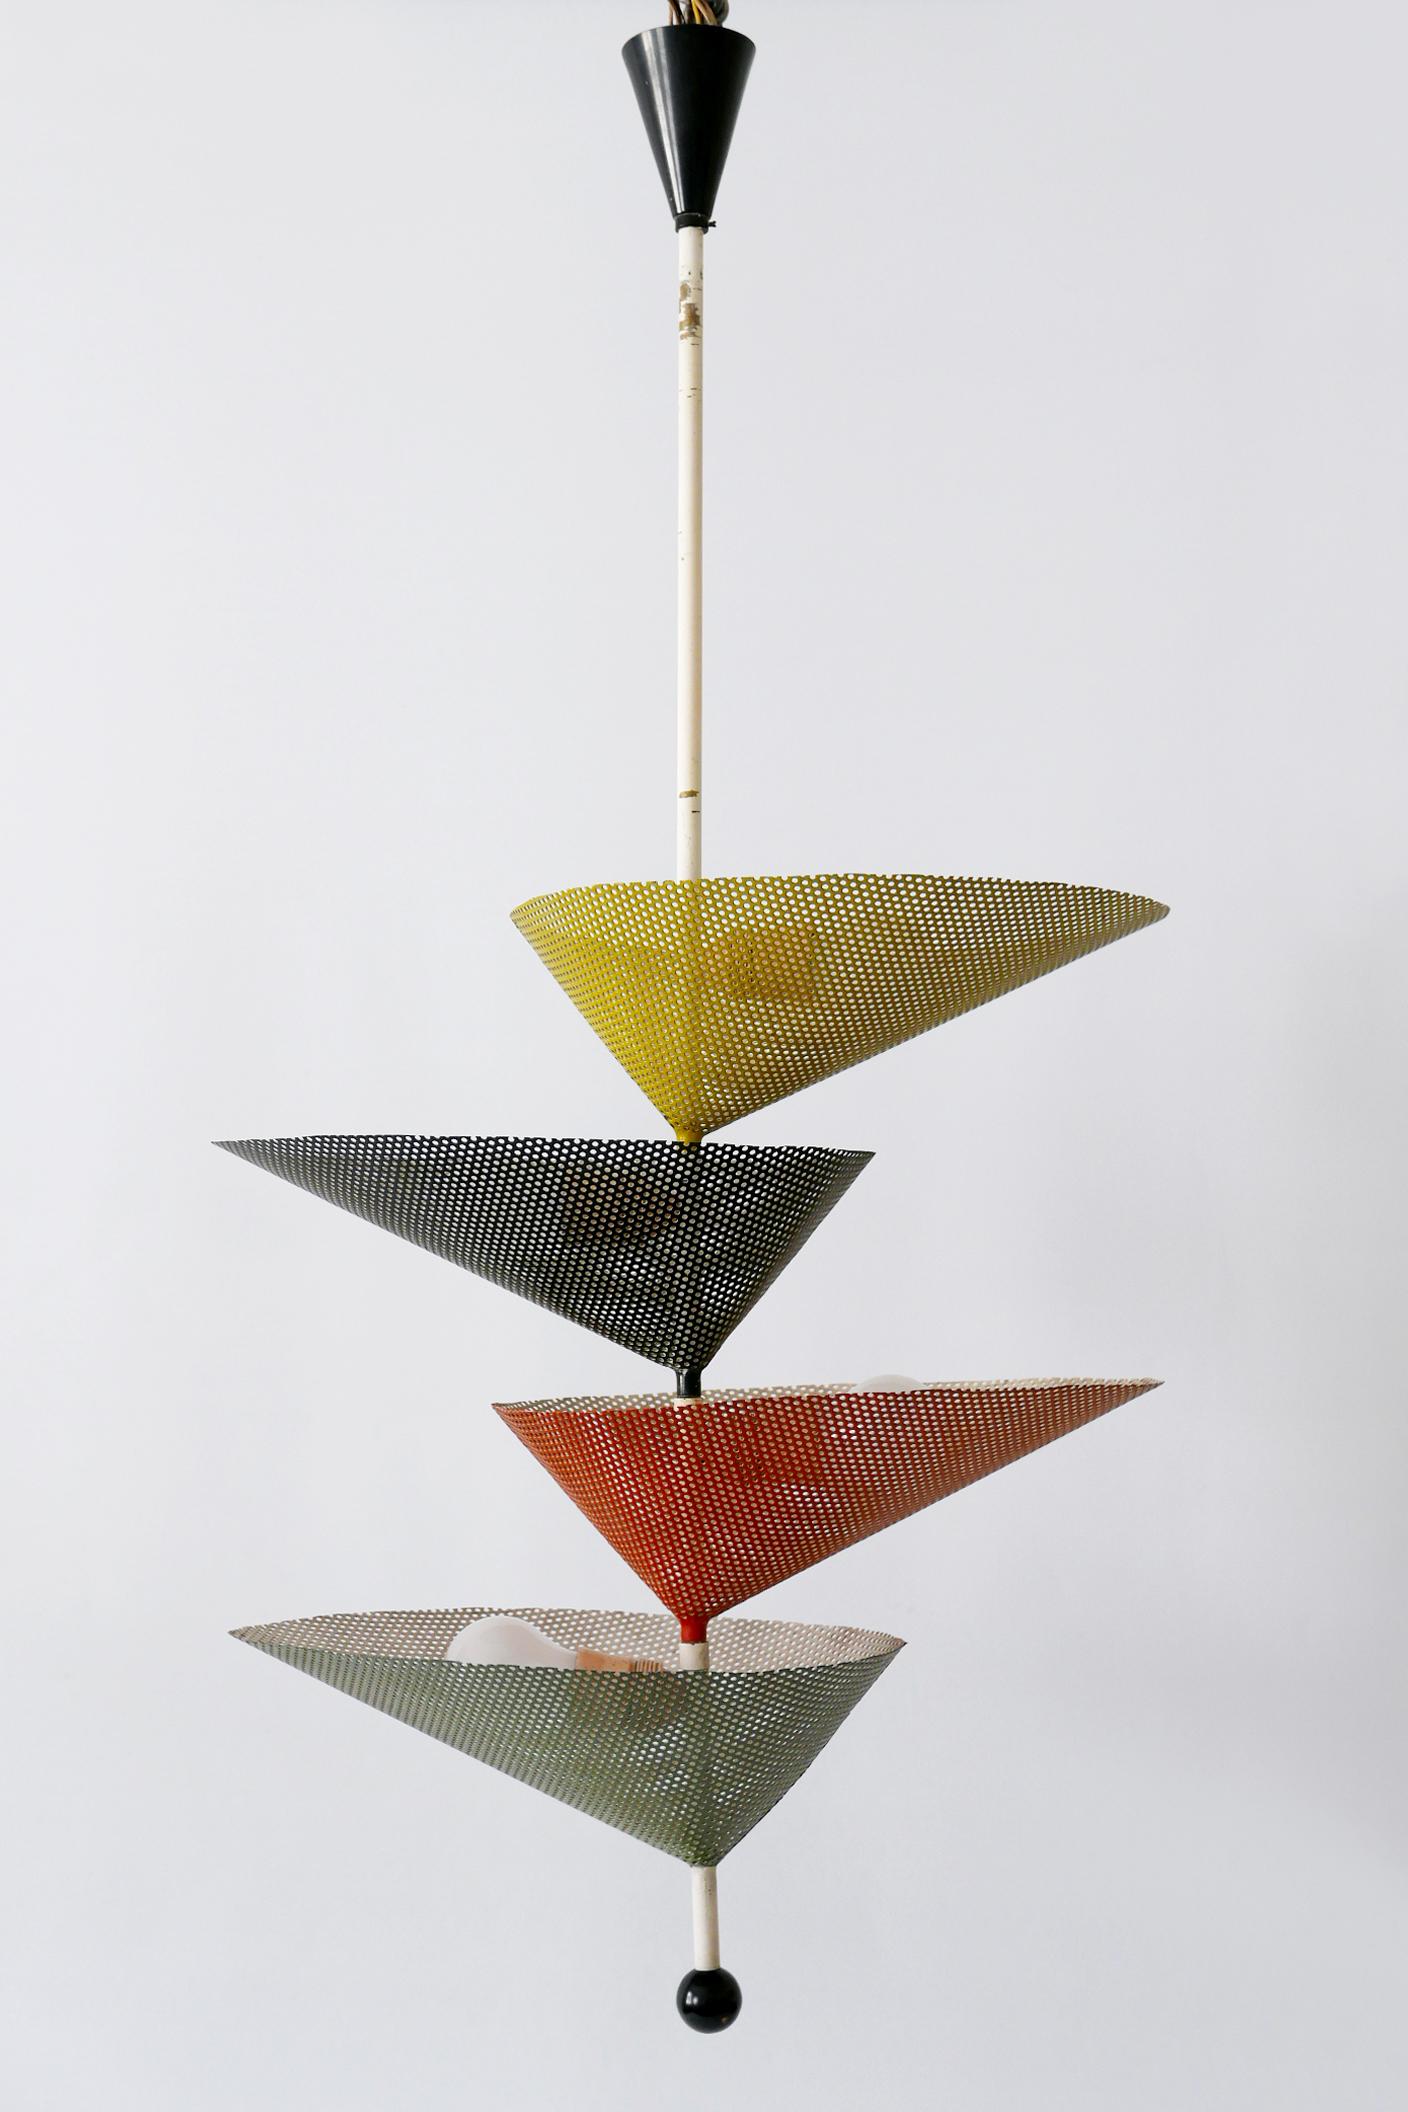 Mid-20th Century Rare Mid-Century Modern Chandelier or Pendant Lamp by Mathieu Matégot 1950s